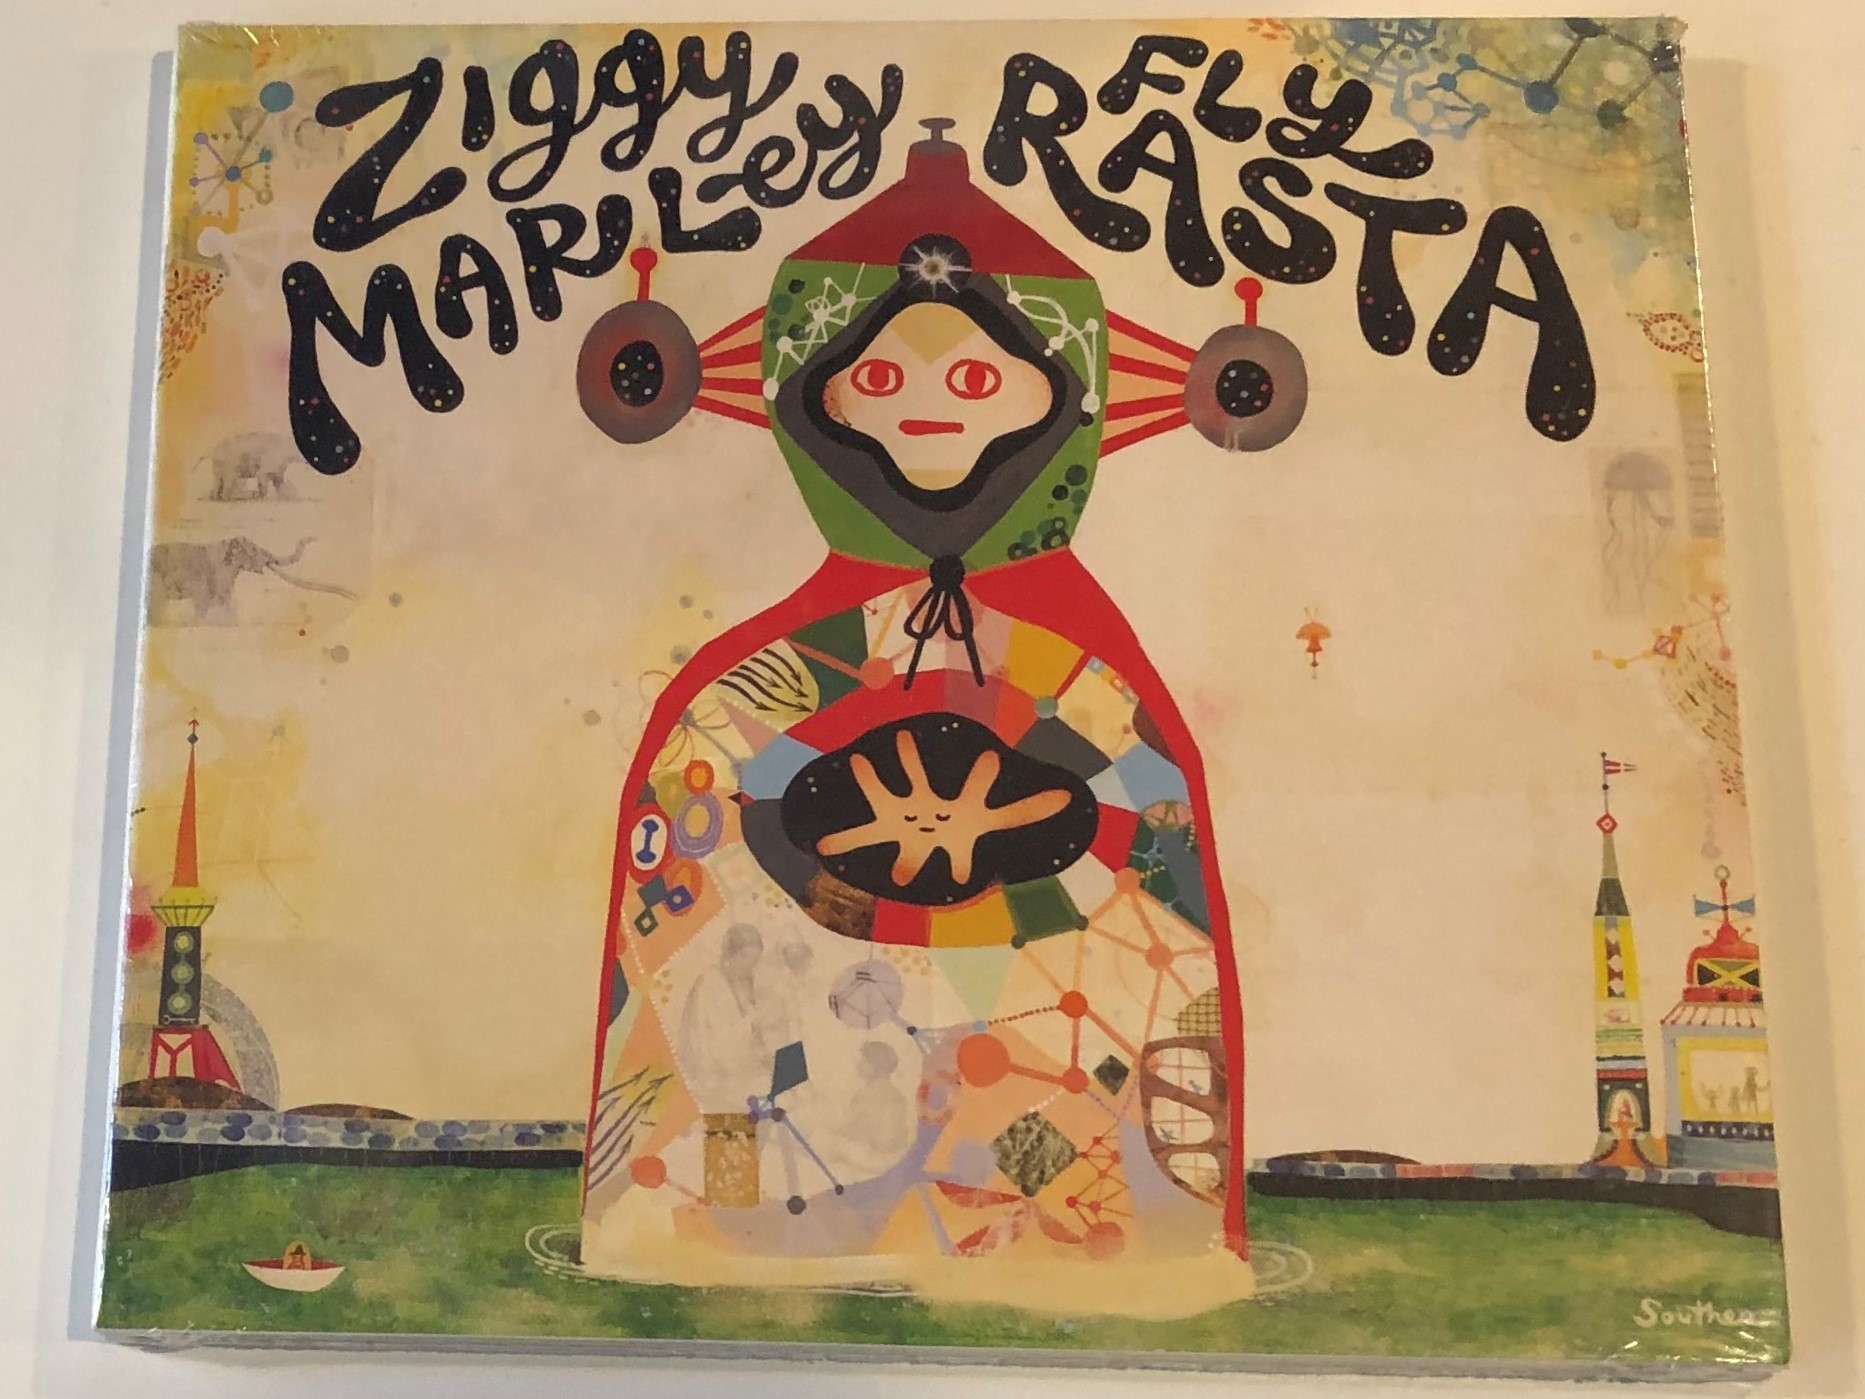 ziggy-marley-fly-rasta-tuff-gong-worldwide-audio-cd-2014-vvnl25572-1-.jpg